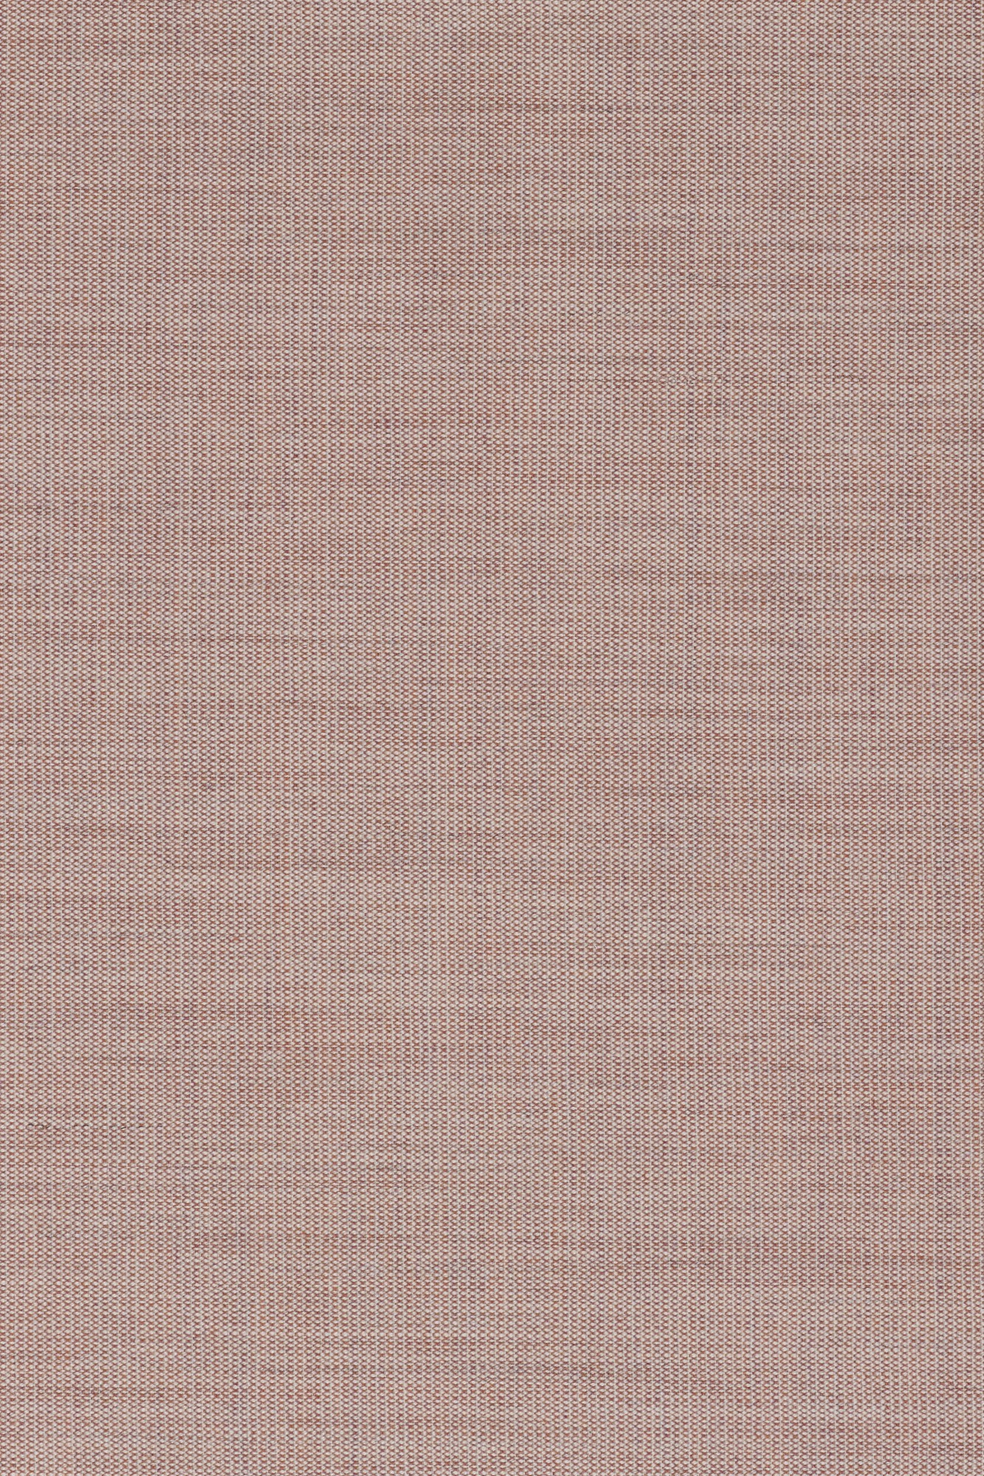 Fabric sample Canvas 2 614 pink